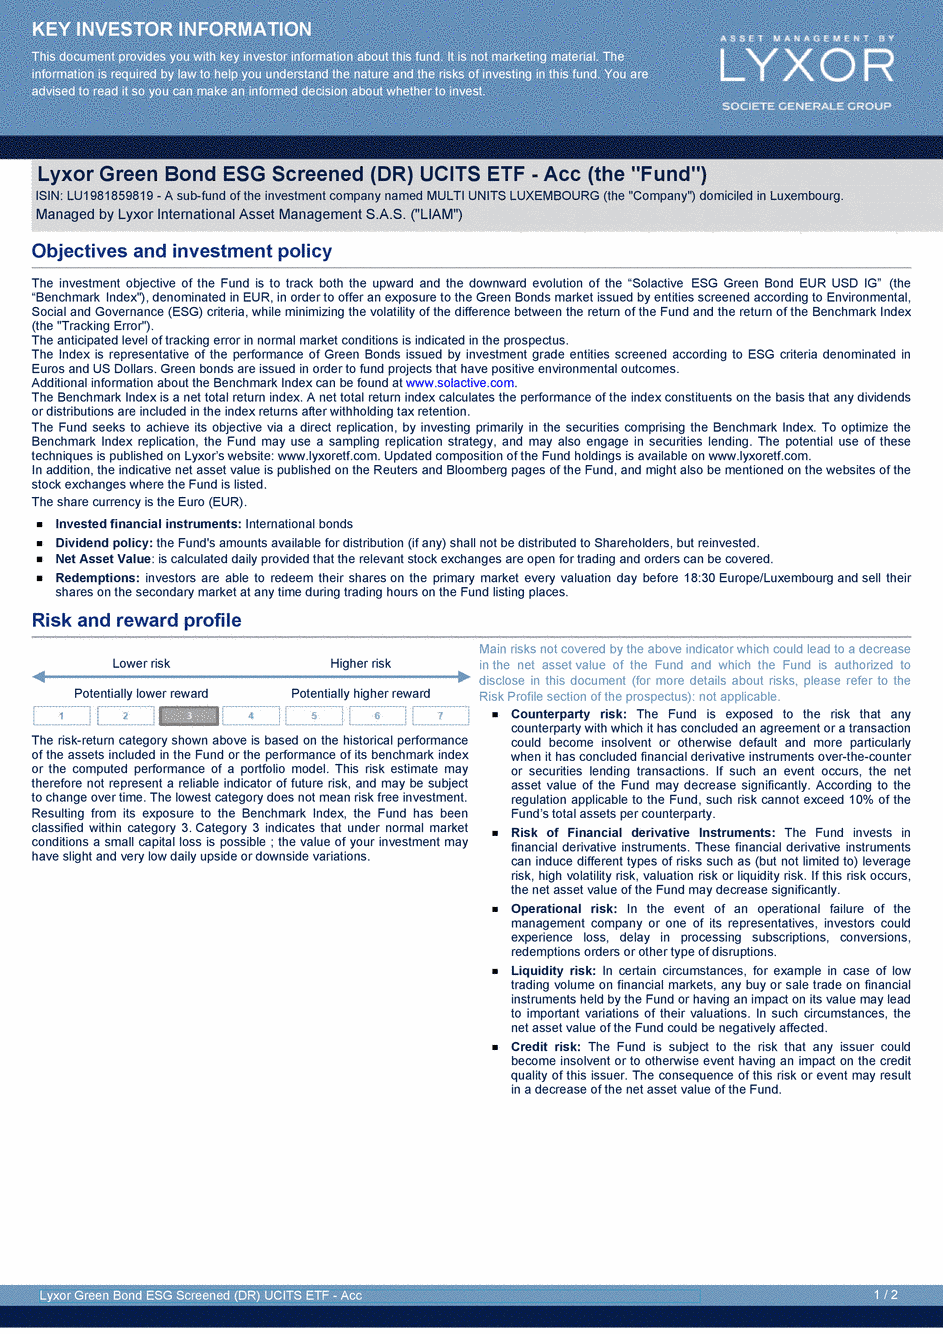 DICI Lyxor Green Bond ESG Screened (DR) UCITS ETF - Acc - 25/10/2019 - Anglais